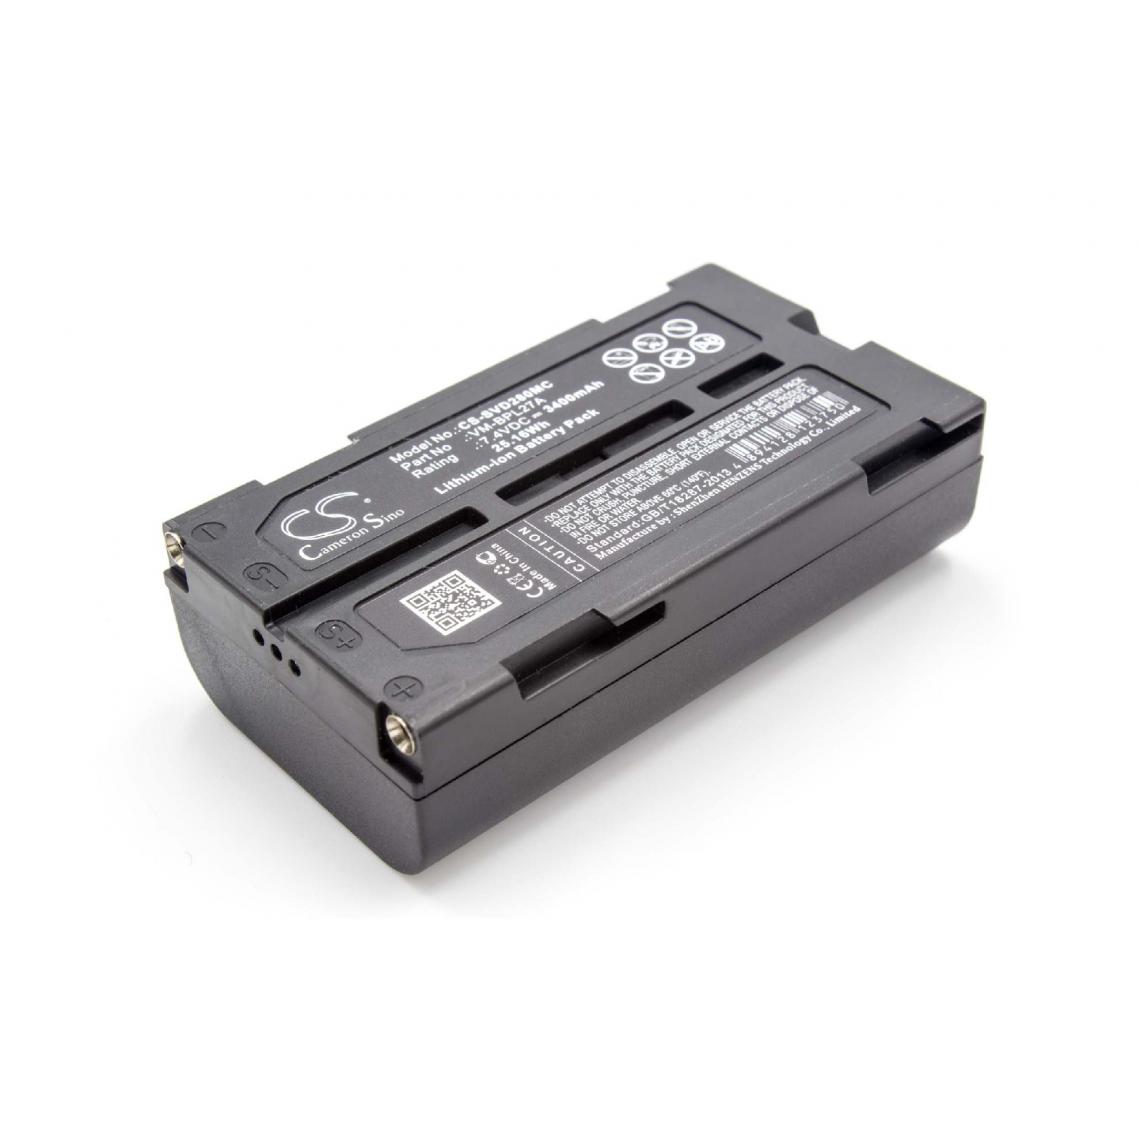 Vhbw - vhbw Batterie compatible avec Sokkia SET330R, SET 330R, SET330R3, SET 330R3, SET330RK, SET 330RK outil de mesure (3400mAh, 7,4V, Li-ion) - Piles rechargeables